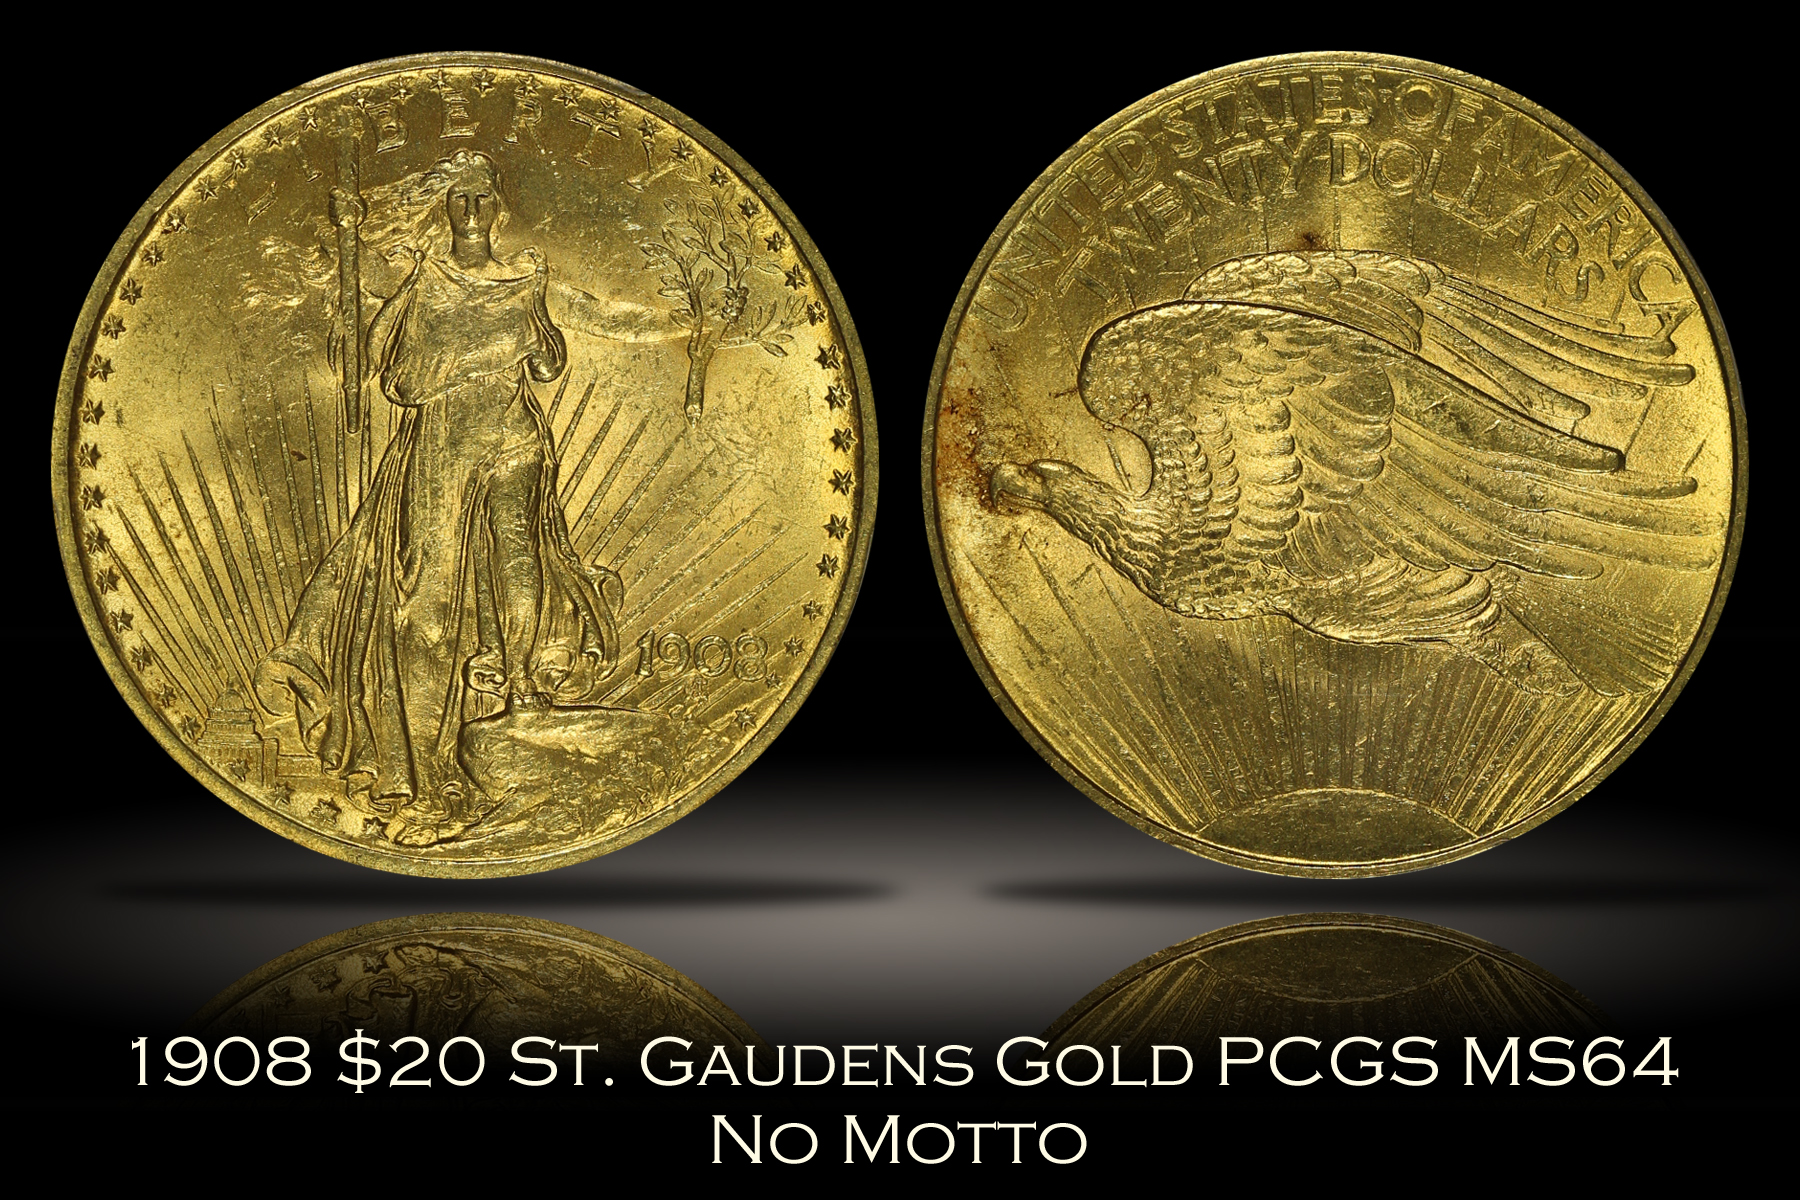 1908 No Motto $20 St. Gaudens Gold PCGS MS64